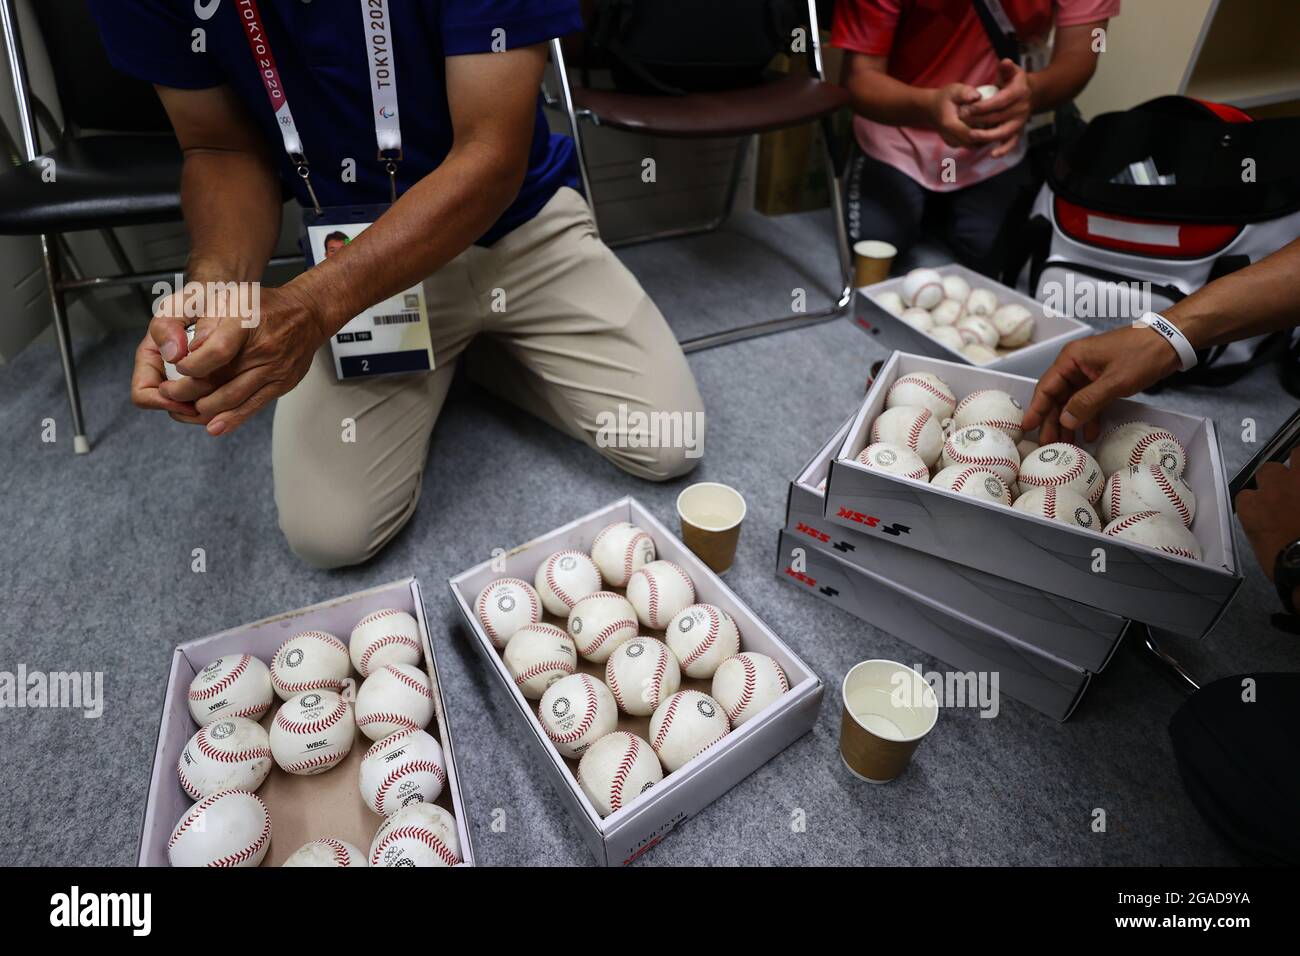 Umpiring officials rub baseballs with mud prior to a game during the Tokyo 2020 Olympics at the Yokohama Baseball Stadium in Yokohama, Japan July 30, 2021. REUTERS/Jorge Silva Stock Photo